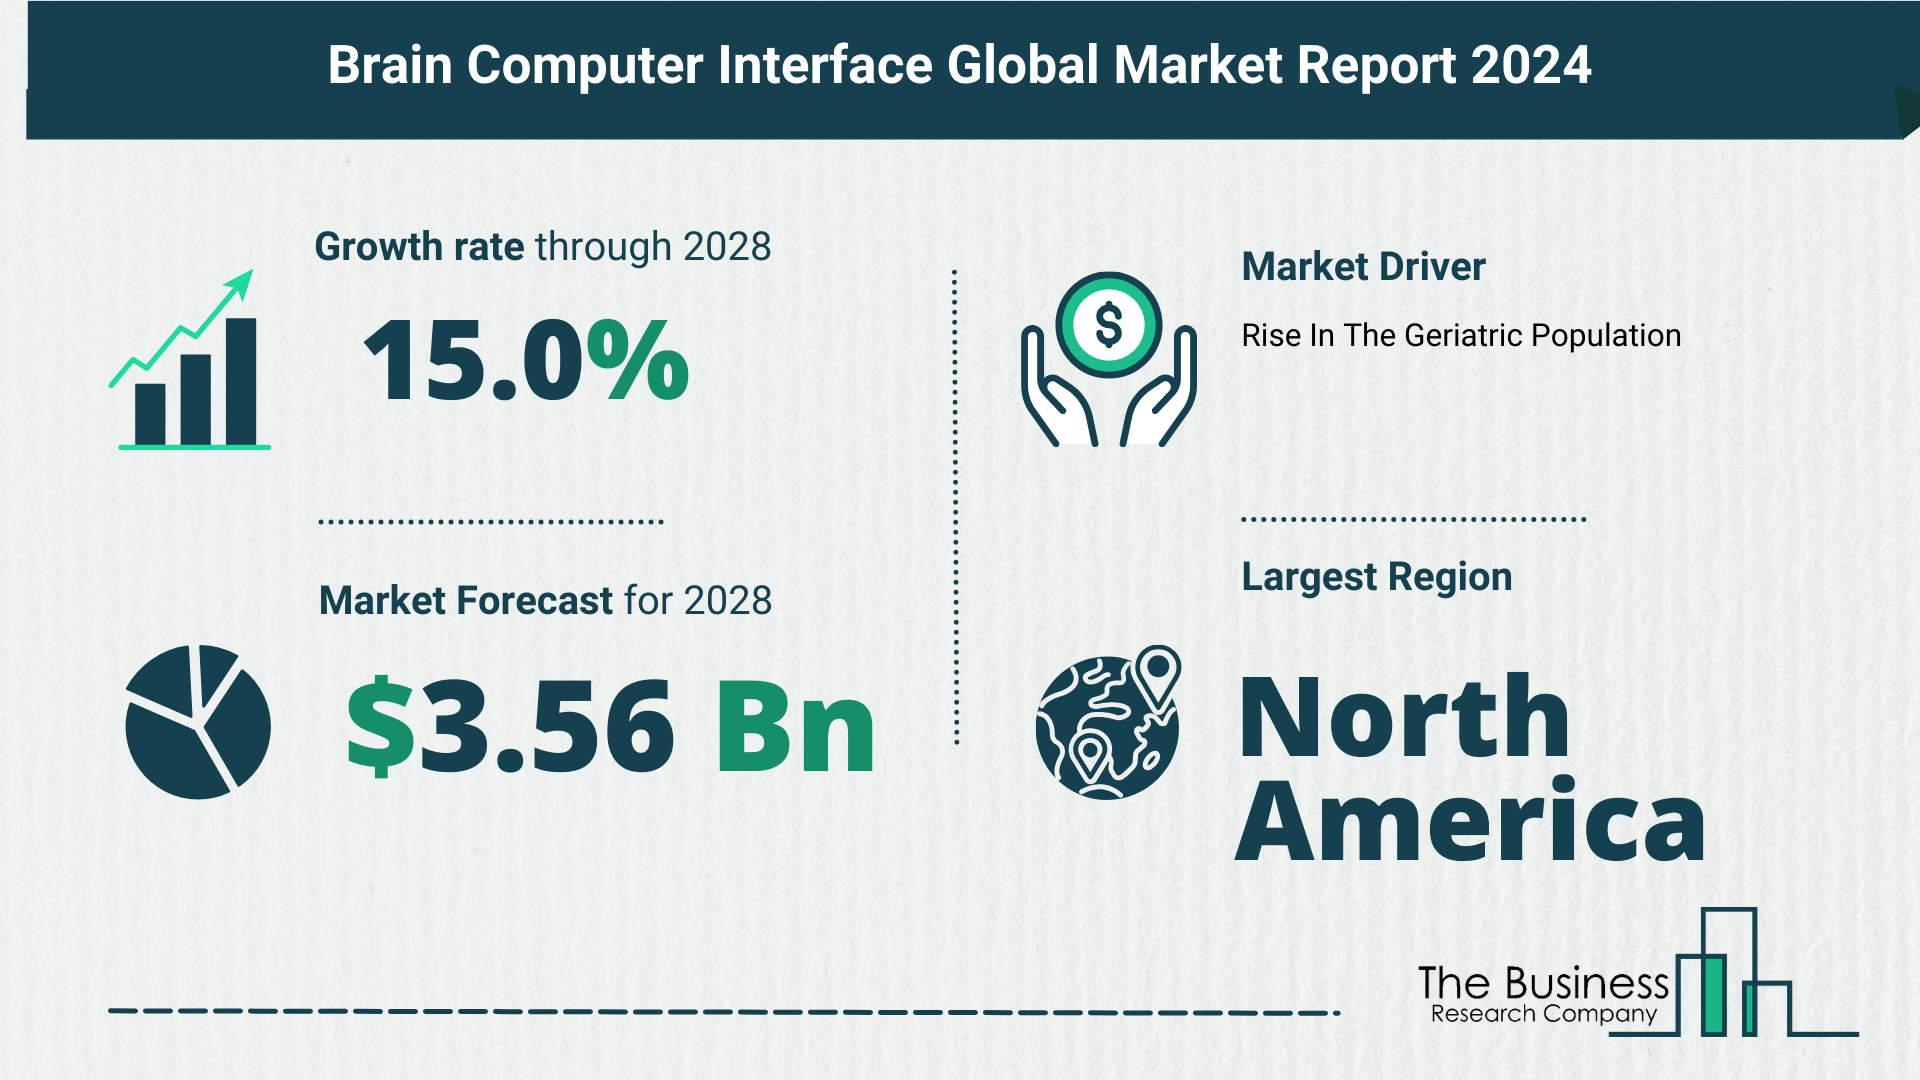 Global Brain Computer Interface Market